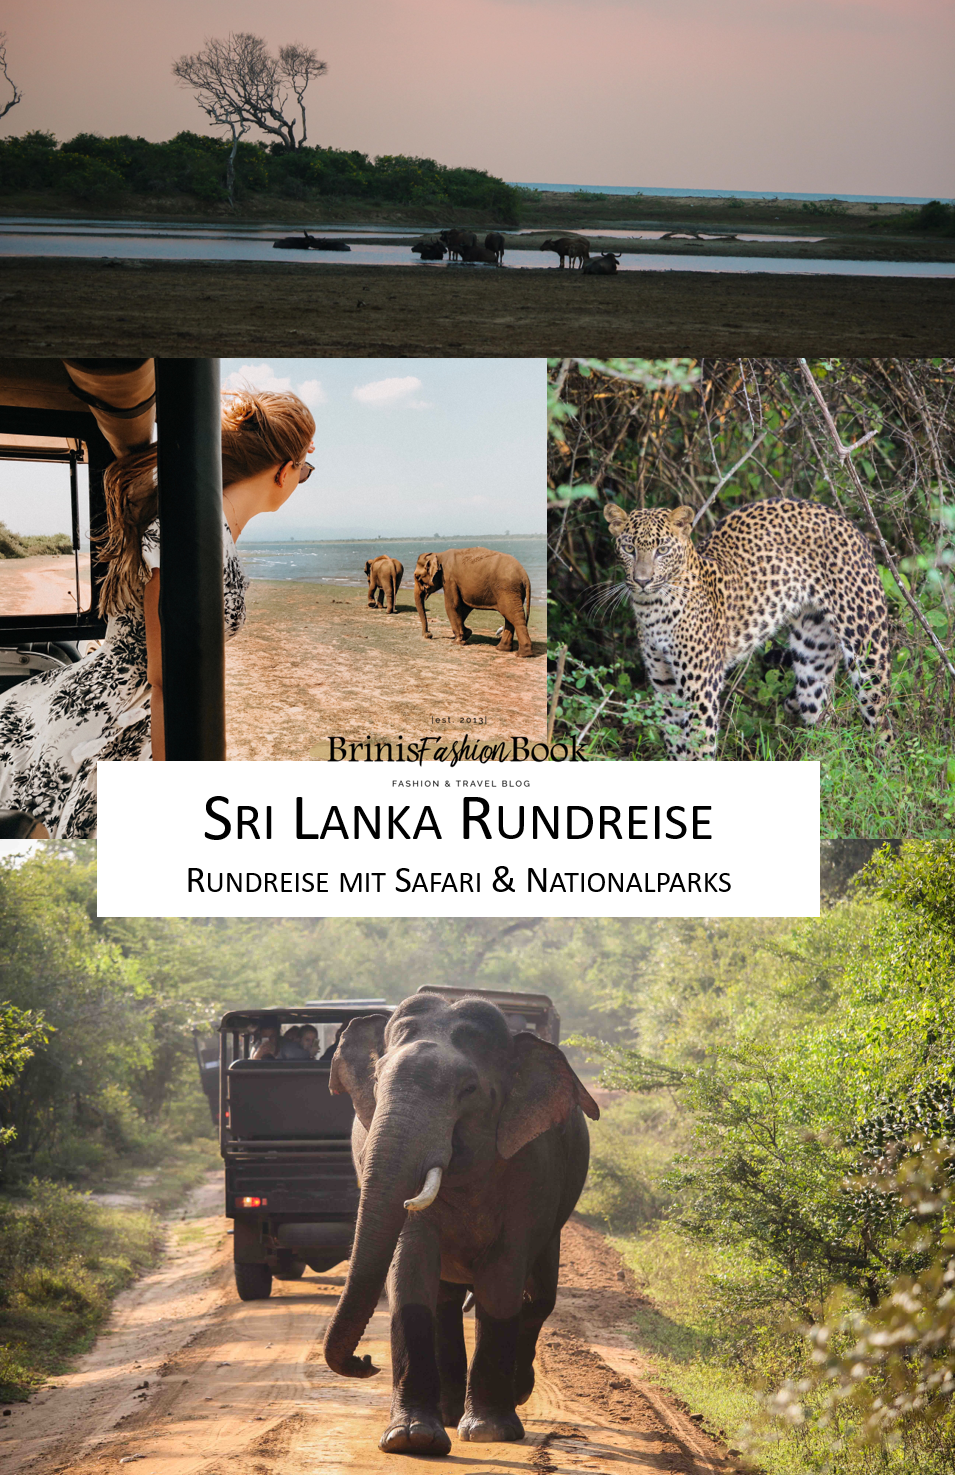 Sri-Lanka-Reiseroute-3-Wochen-Rundreise-Sri-Lanka-Nationalpark-yala-Udawalawe-leoparden-elefanten-Safari-Reiseblog-Tipps